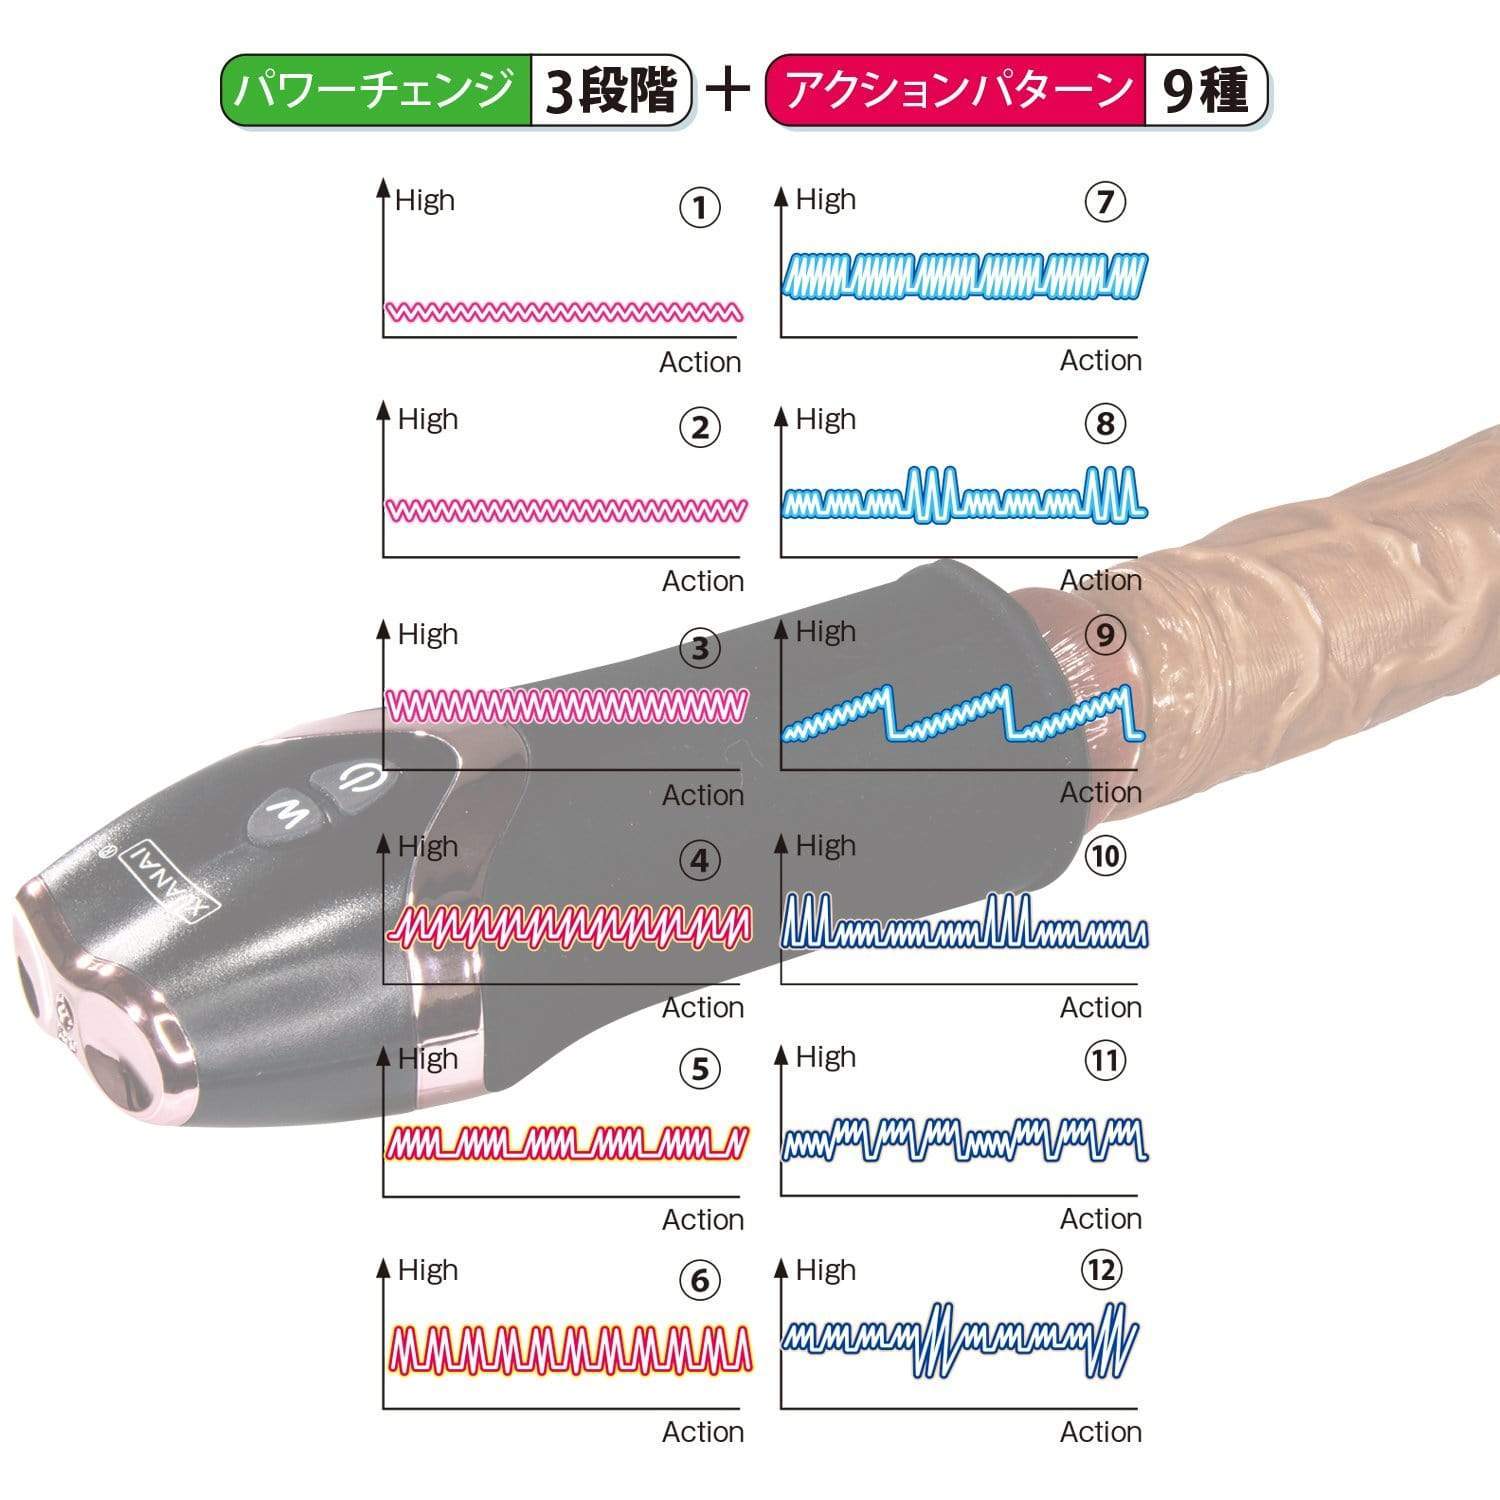 NPG - Gekishine Rechargeable Penis Trainer Masturbator (Black) -  Masturbator Soft Stroker (Vibration) Rechargeable  Durio.sg